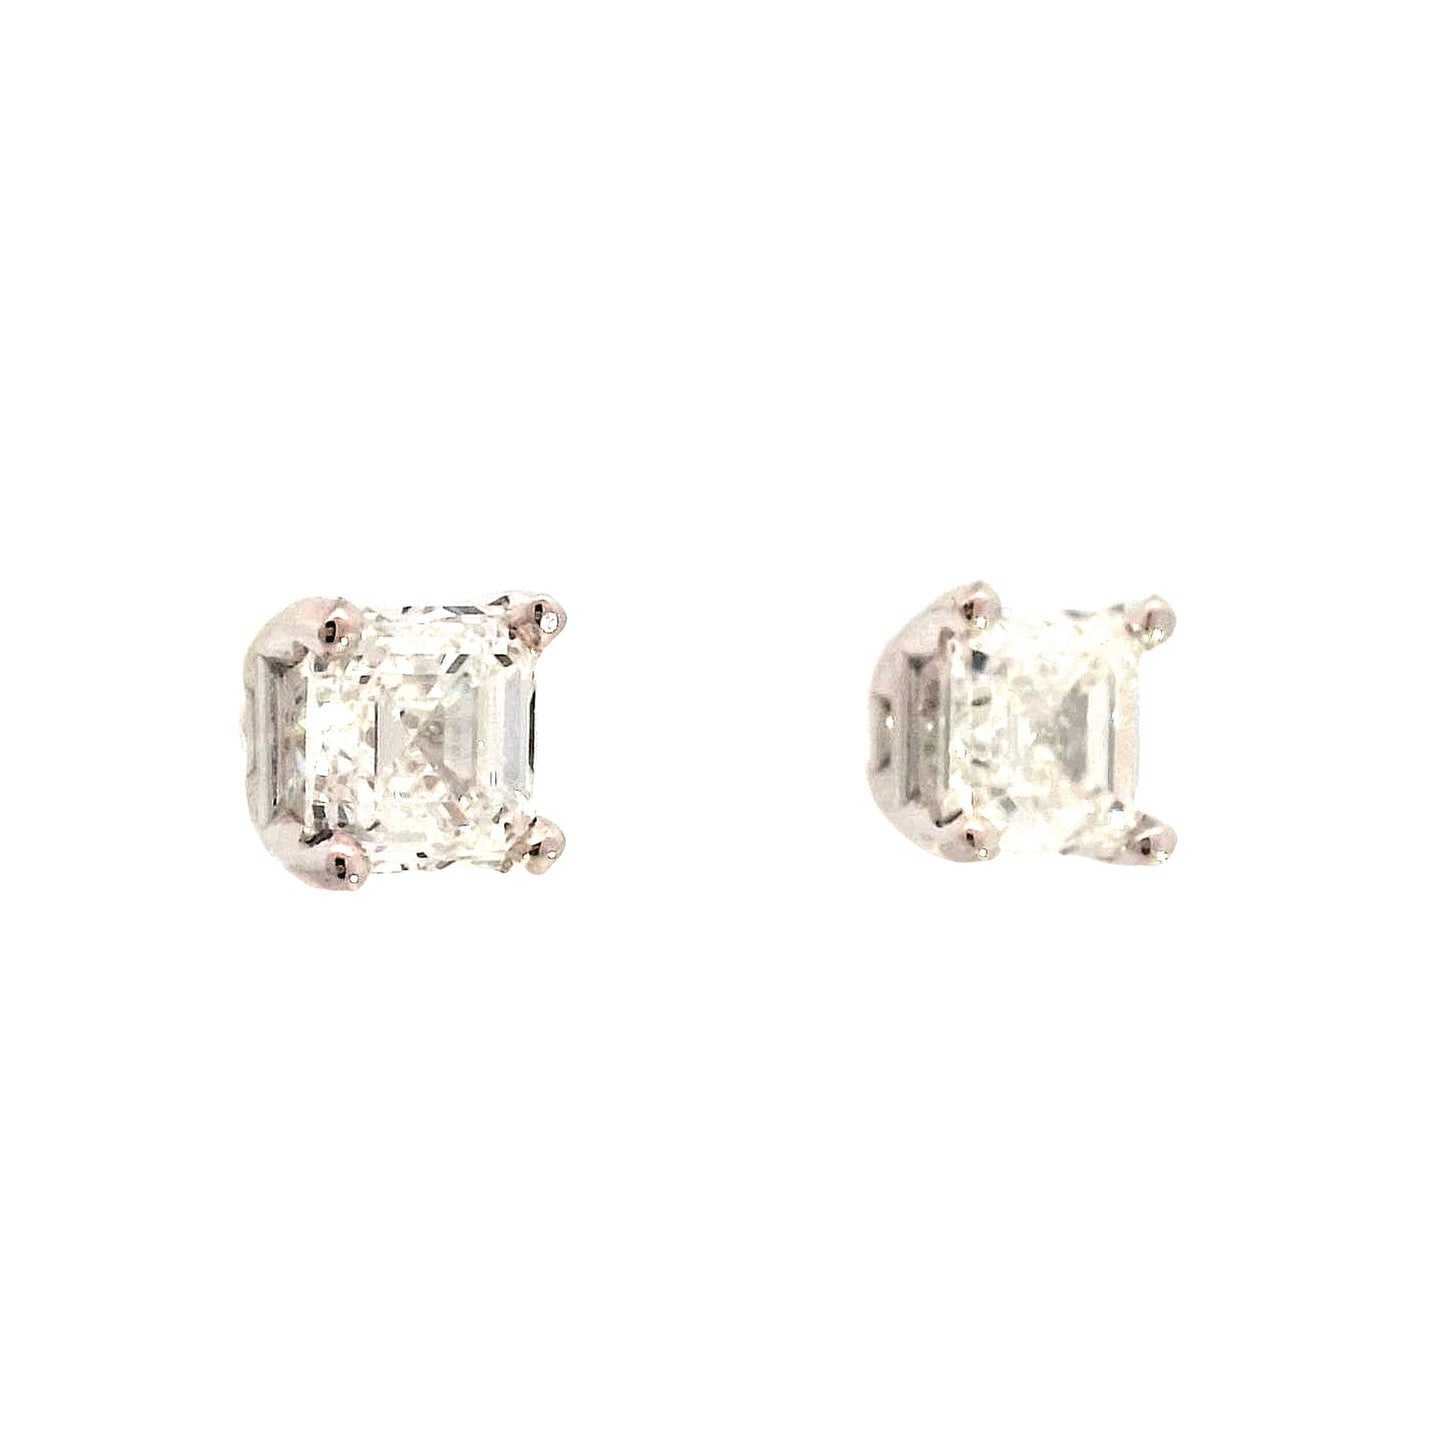 1.96 Asscher Diamond Earring Studs in 14k White Gold